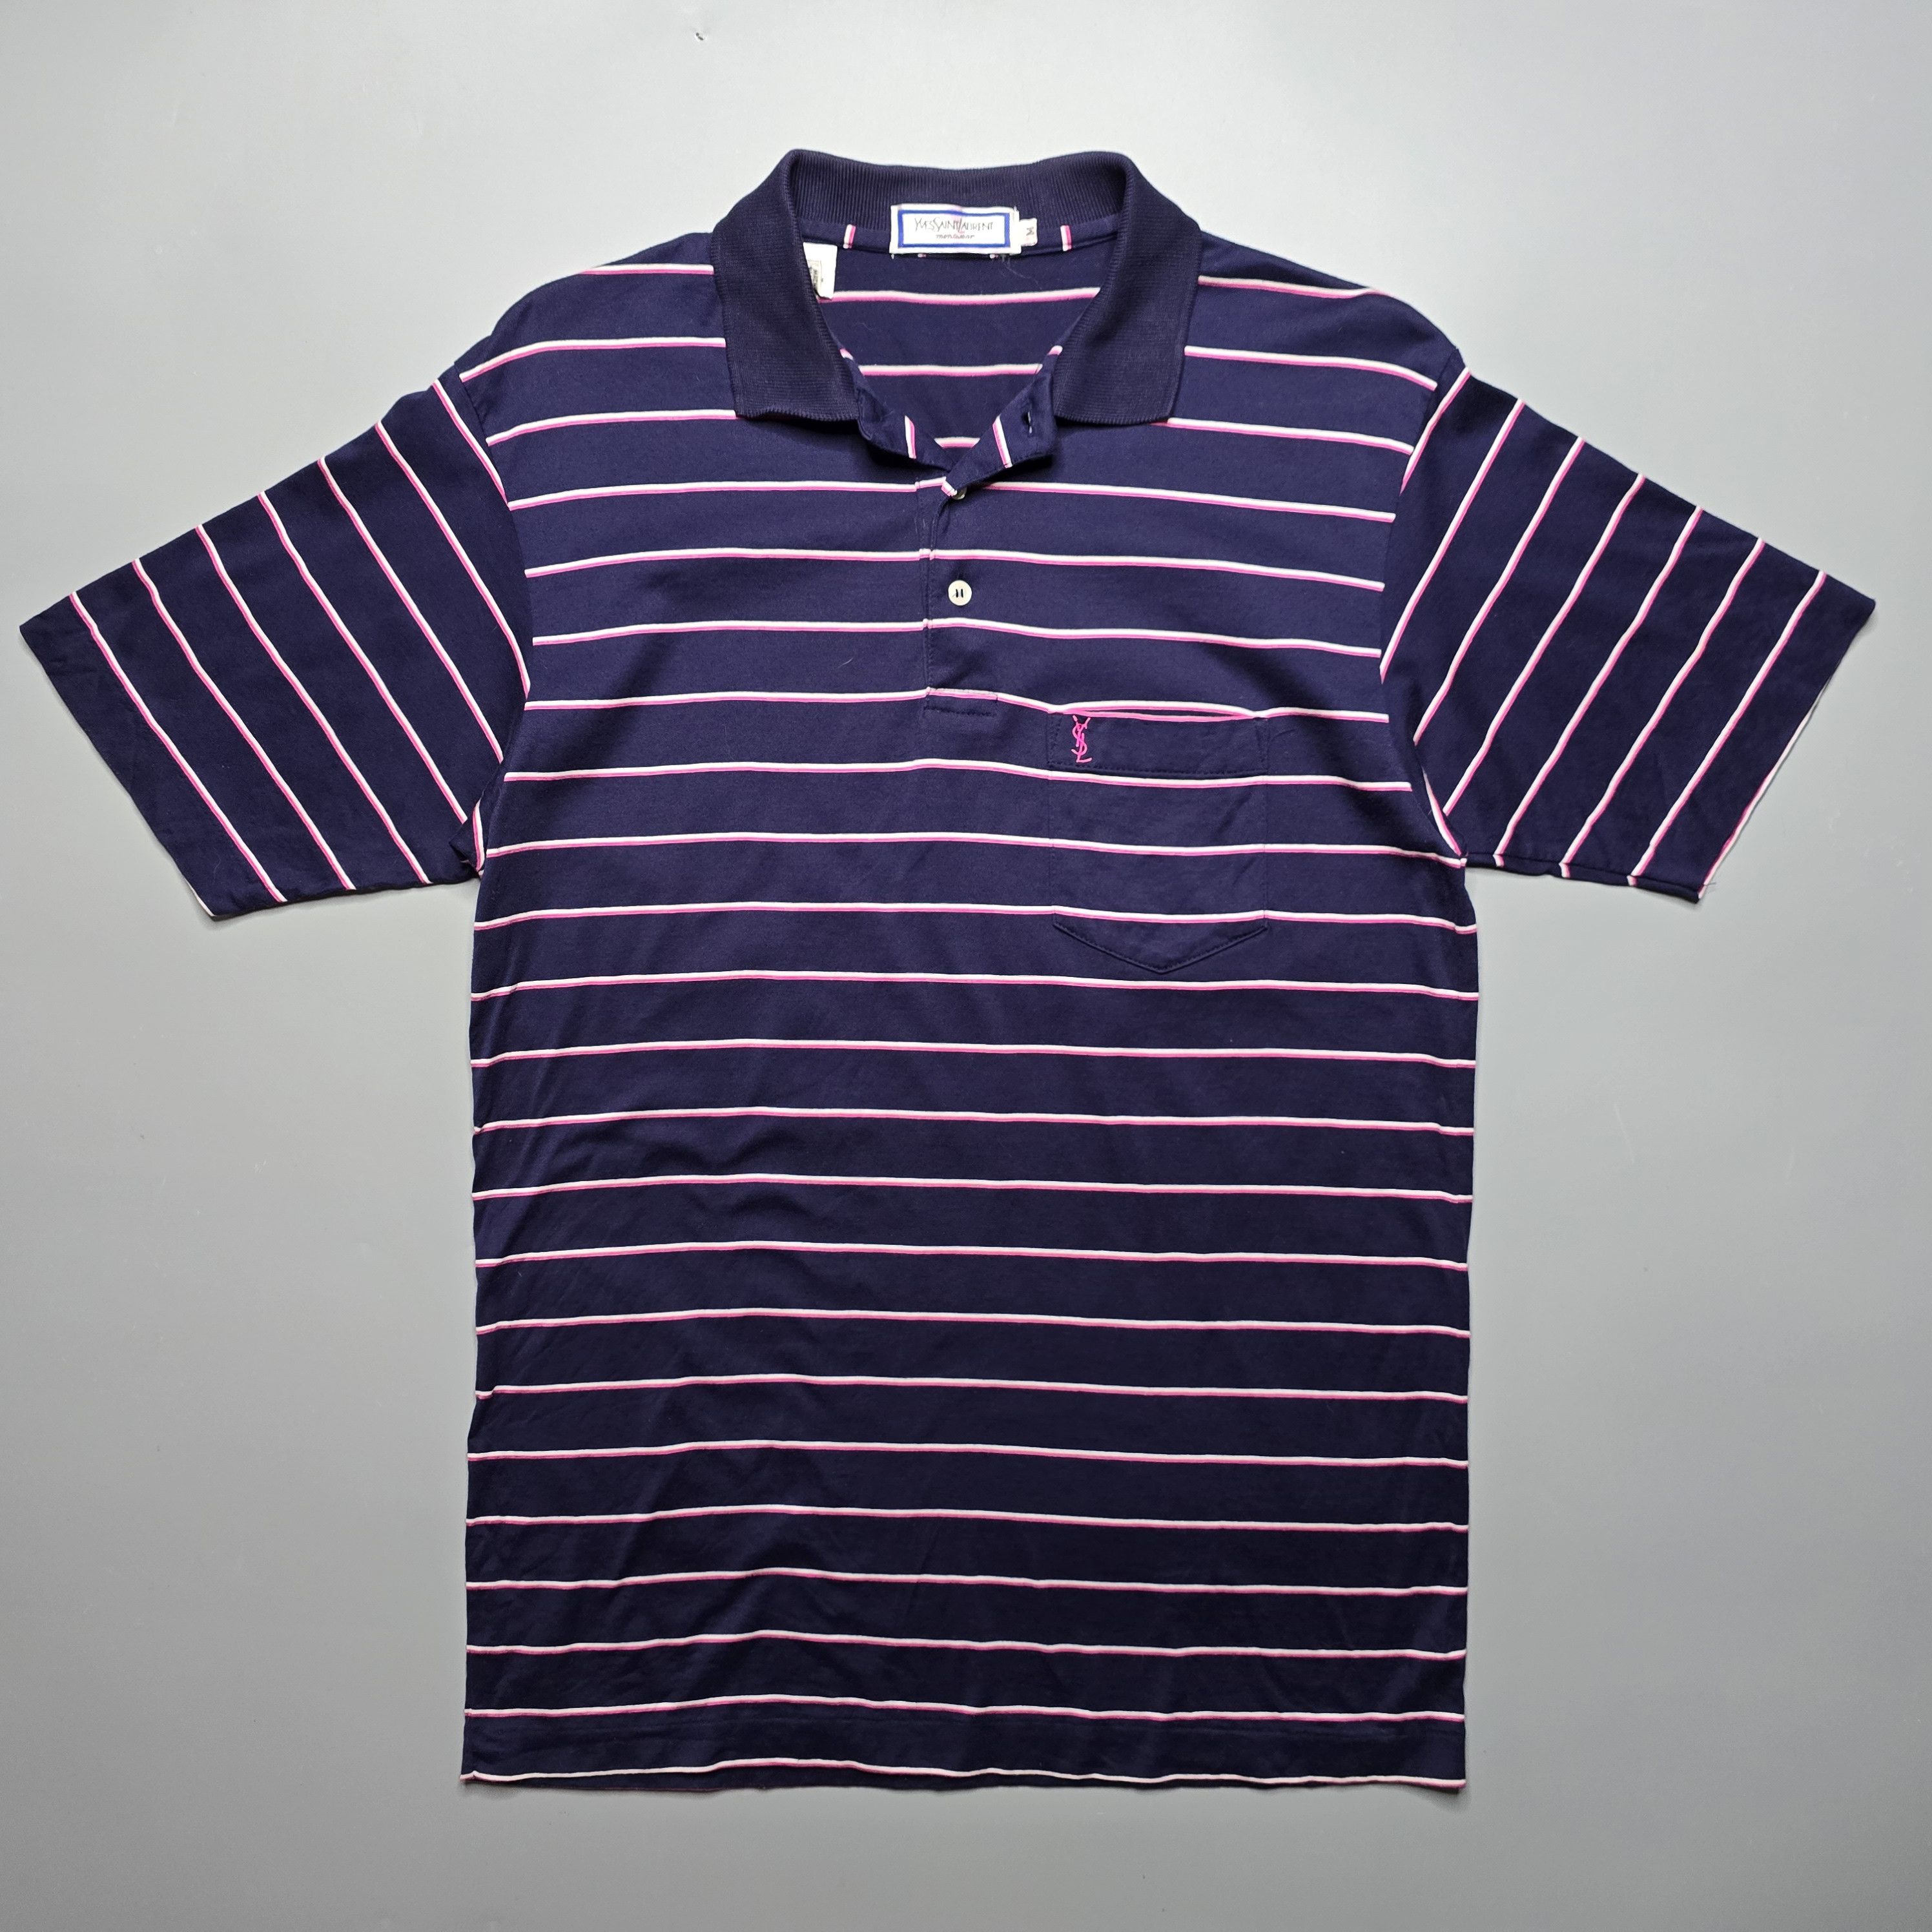 Yves Saint Laurent - Vintage Striped Pocket Polo Shirt - 1